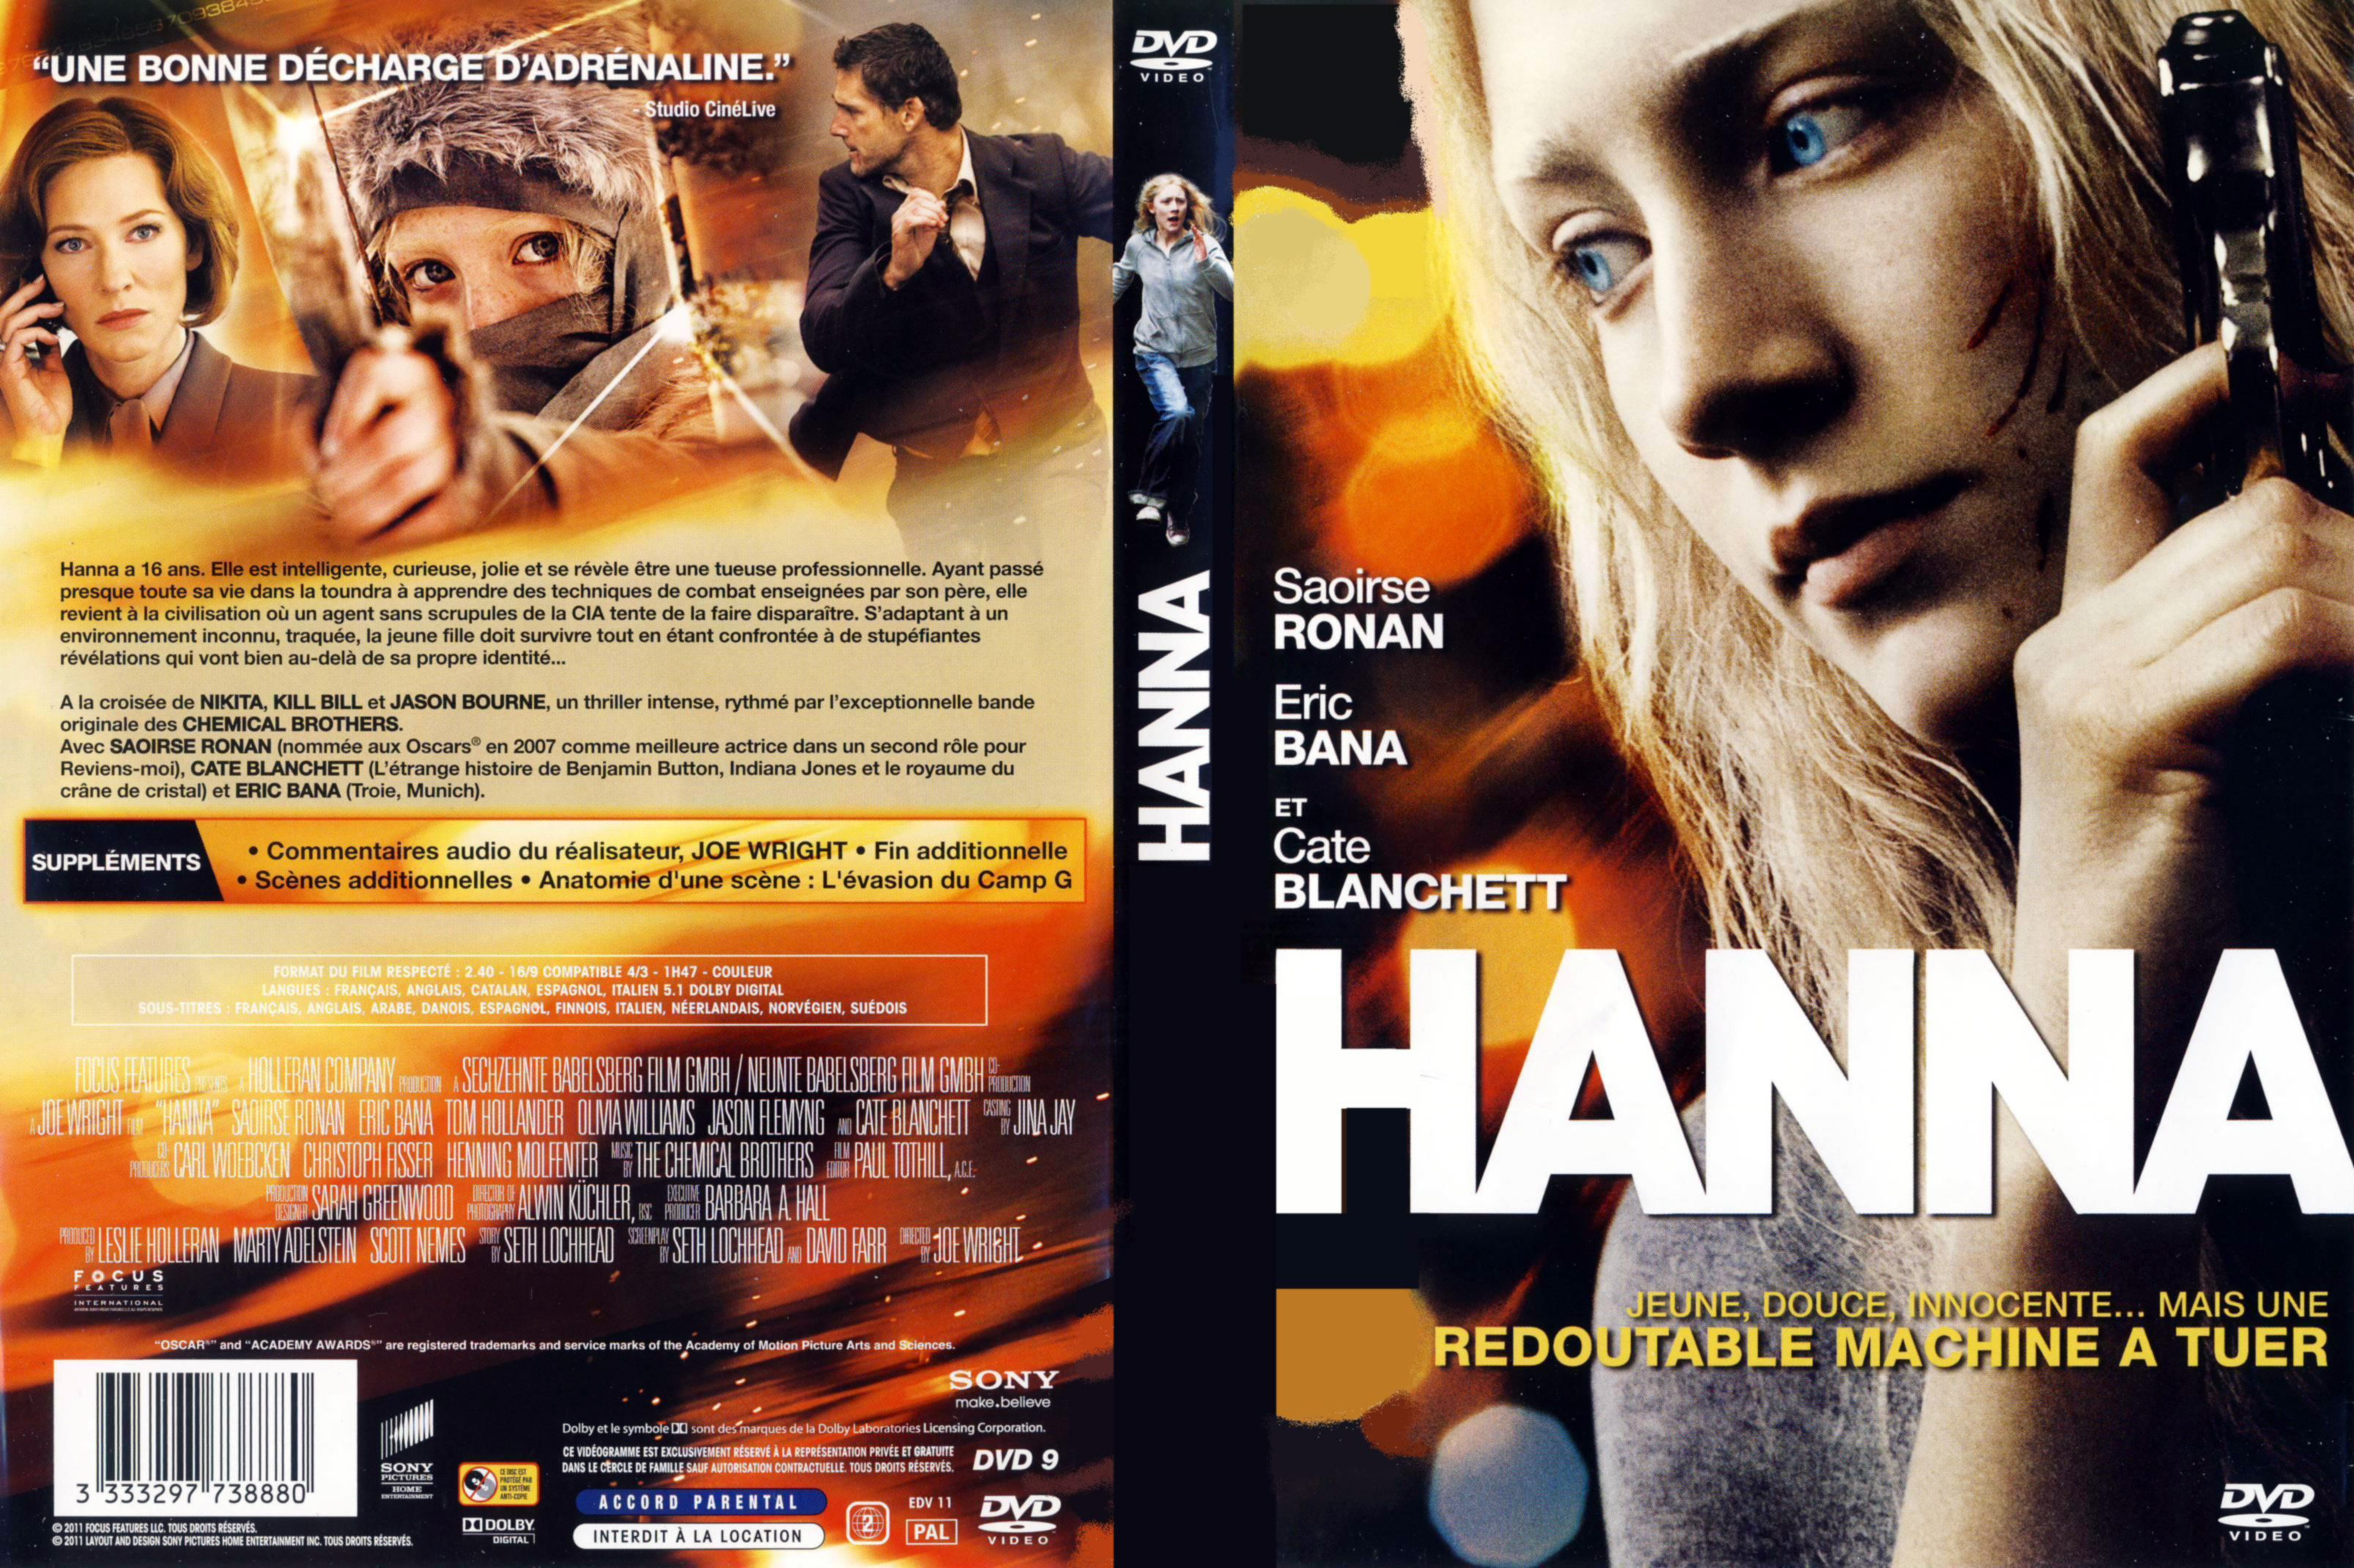 Jaquette DVD Hanna